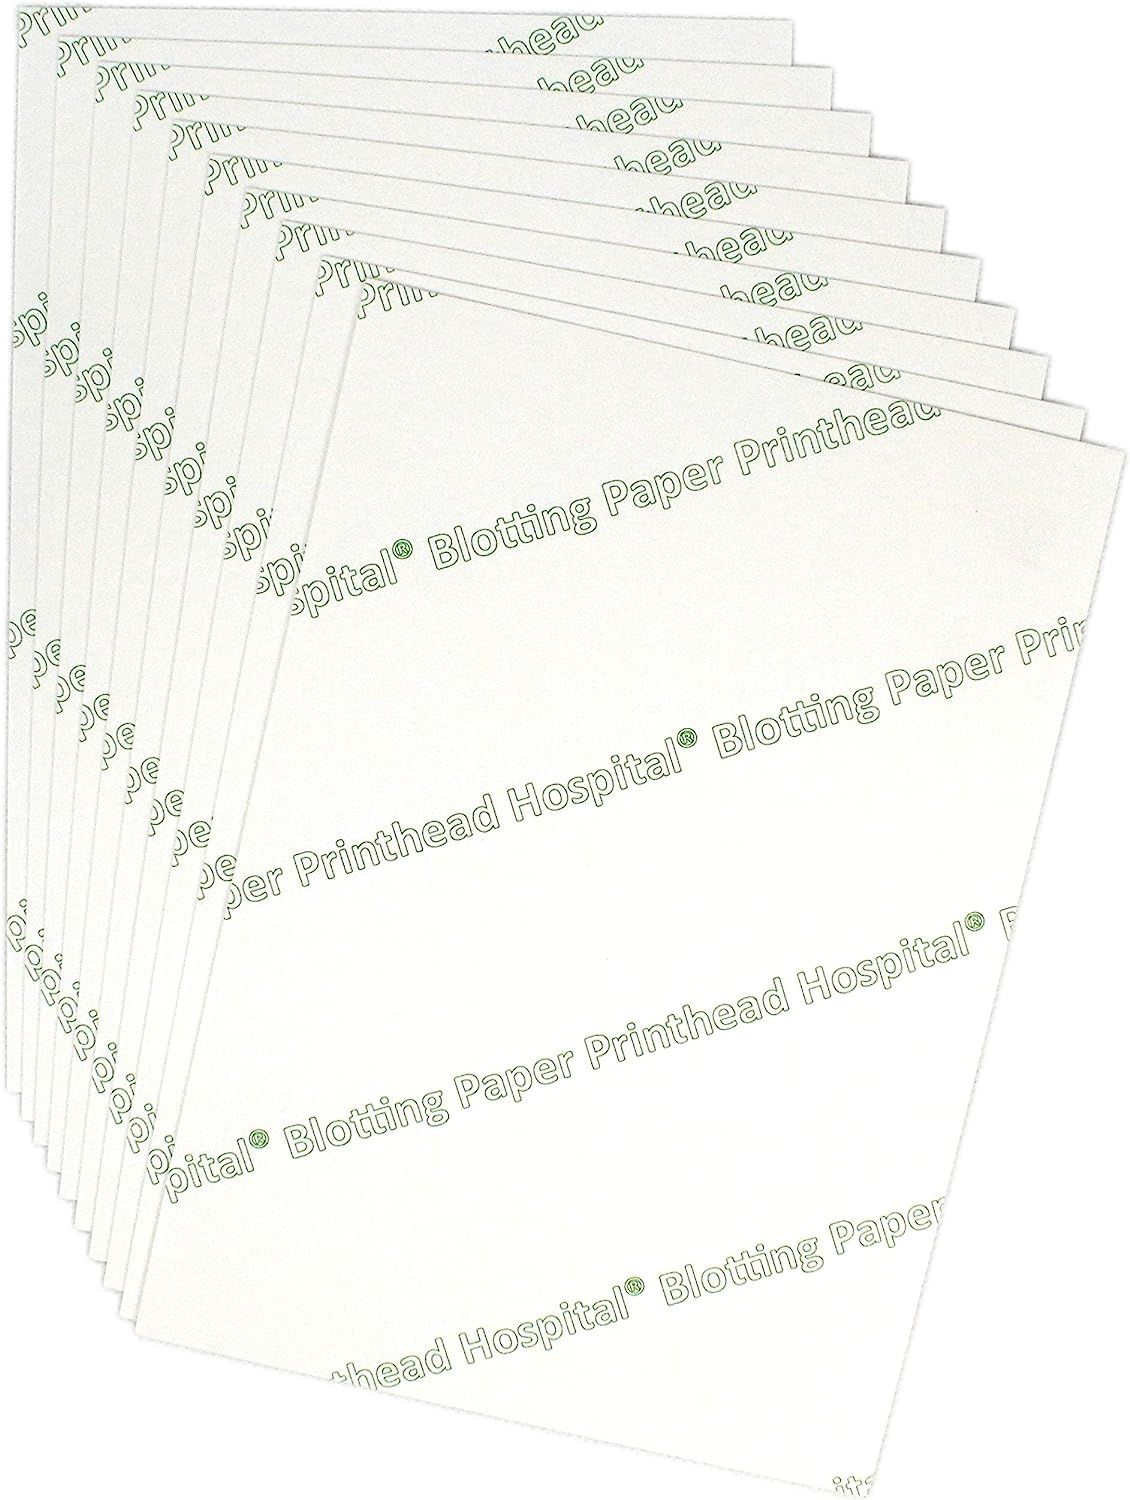 Printhead Hospital Heavyweight Blotting Paper for [...]